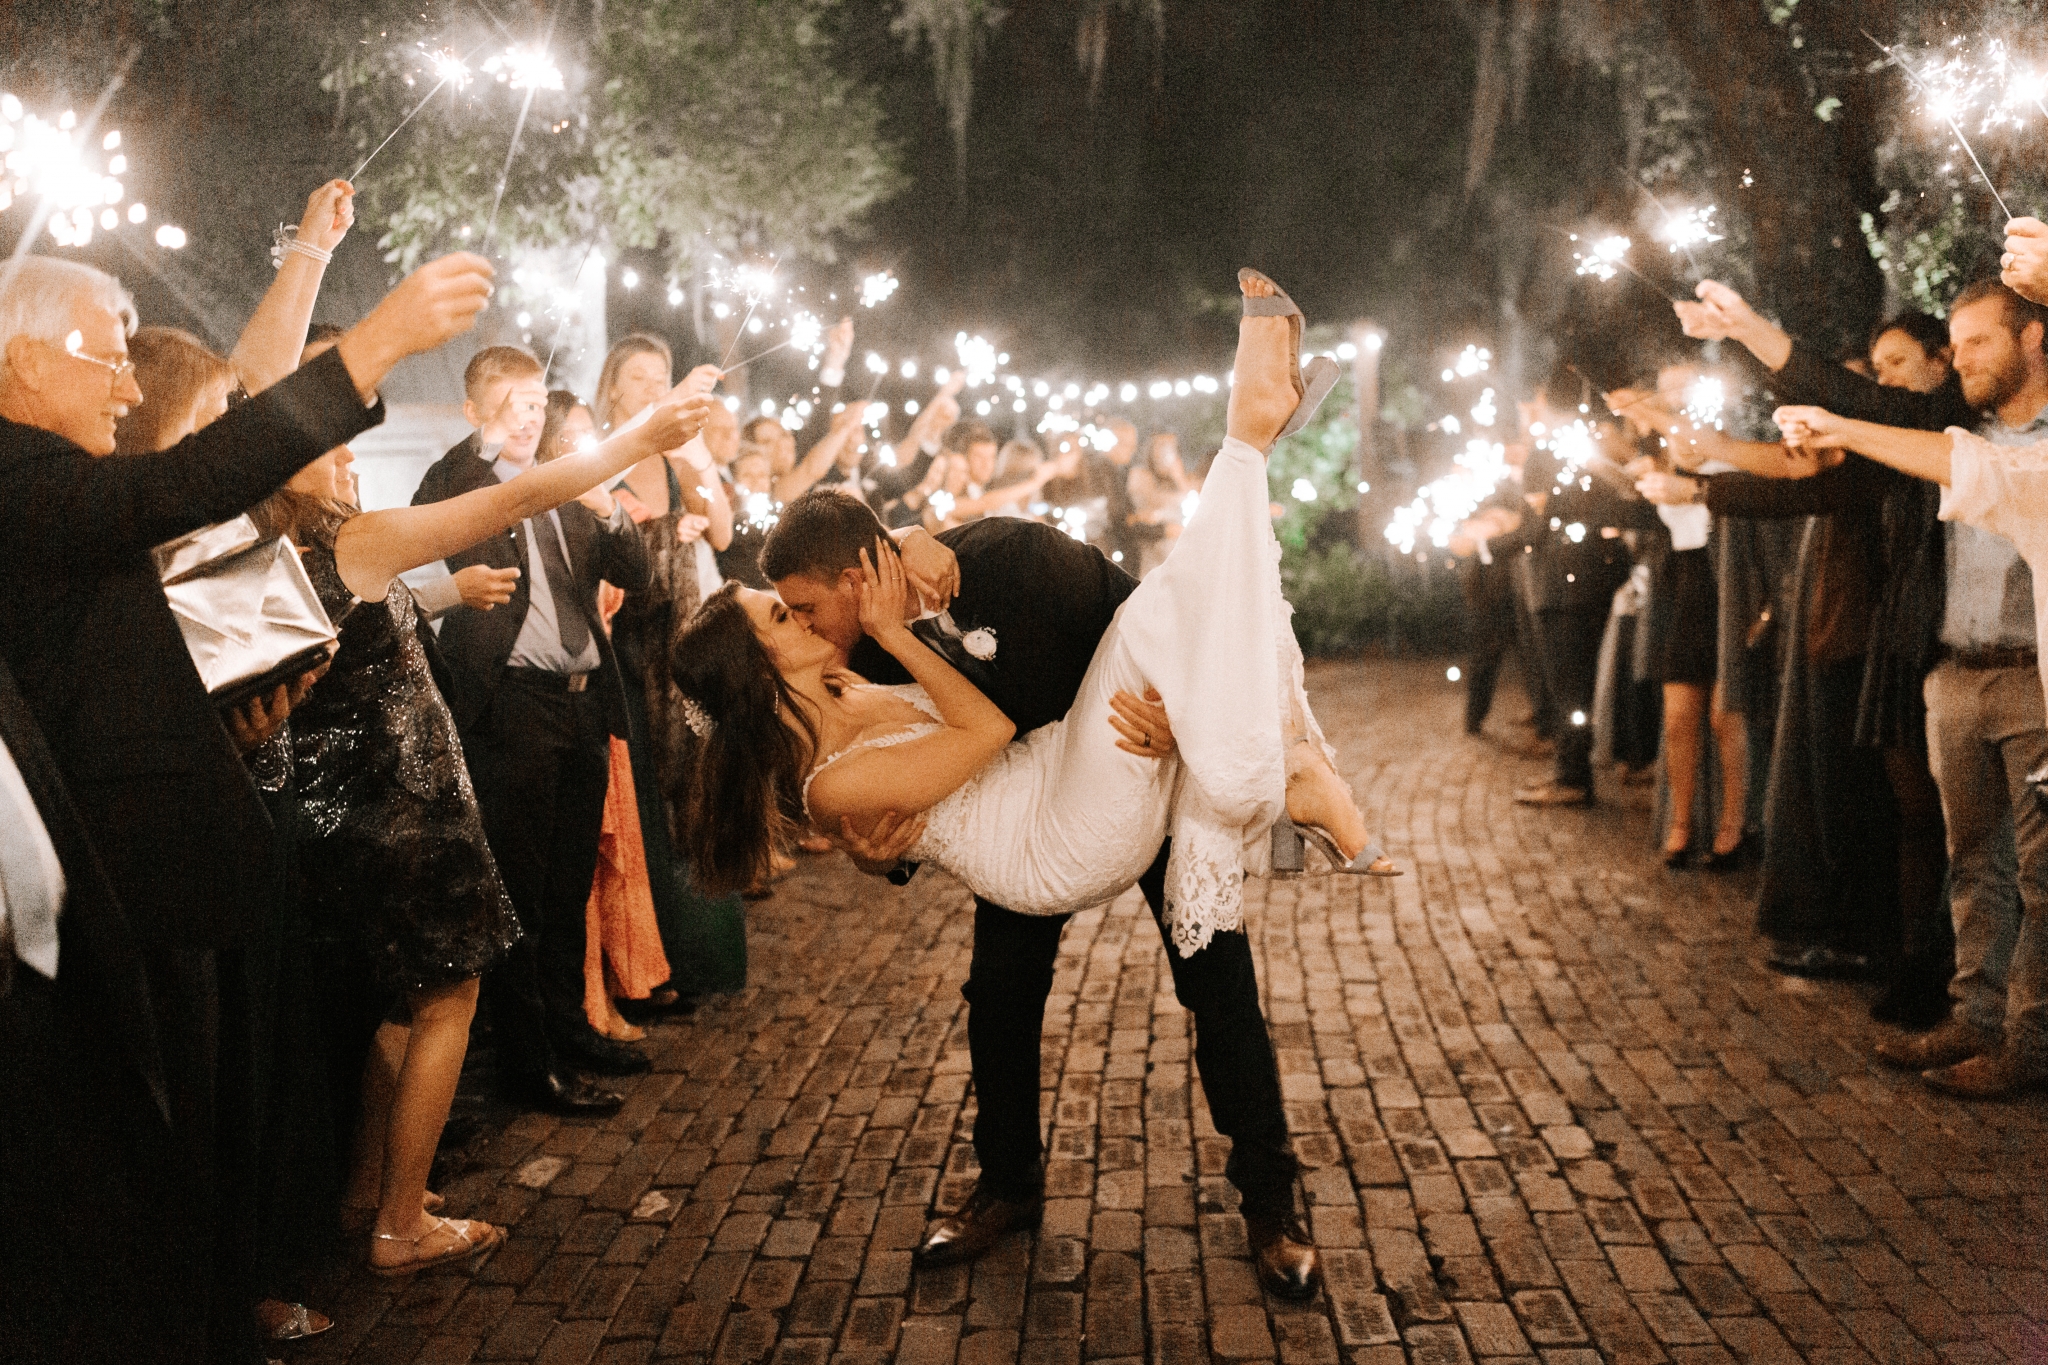 Destination Wedding Photographer Chelsea Renay captures sparkler exit photos for a couple on their wedding day.